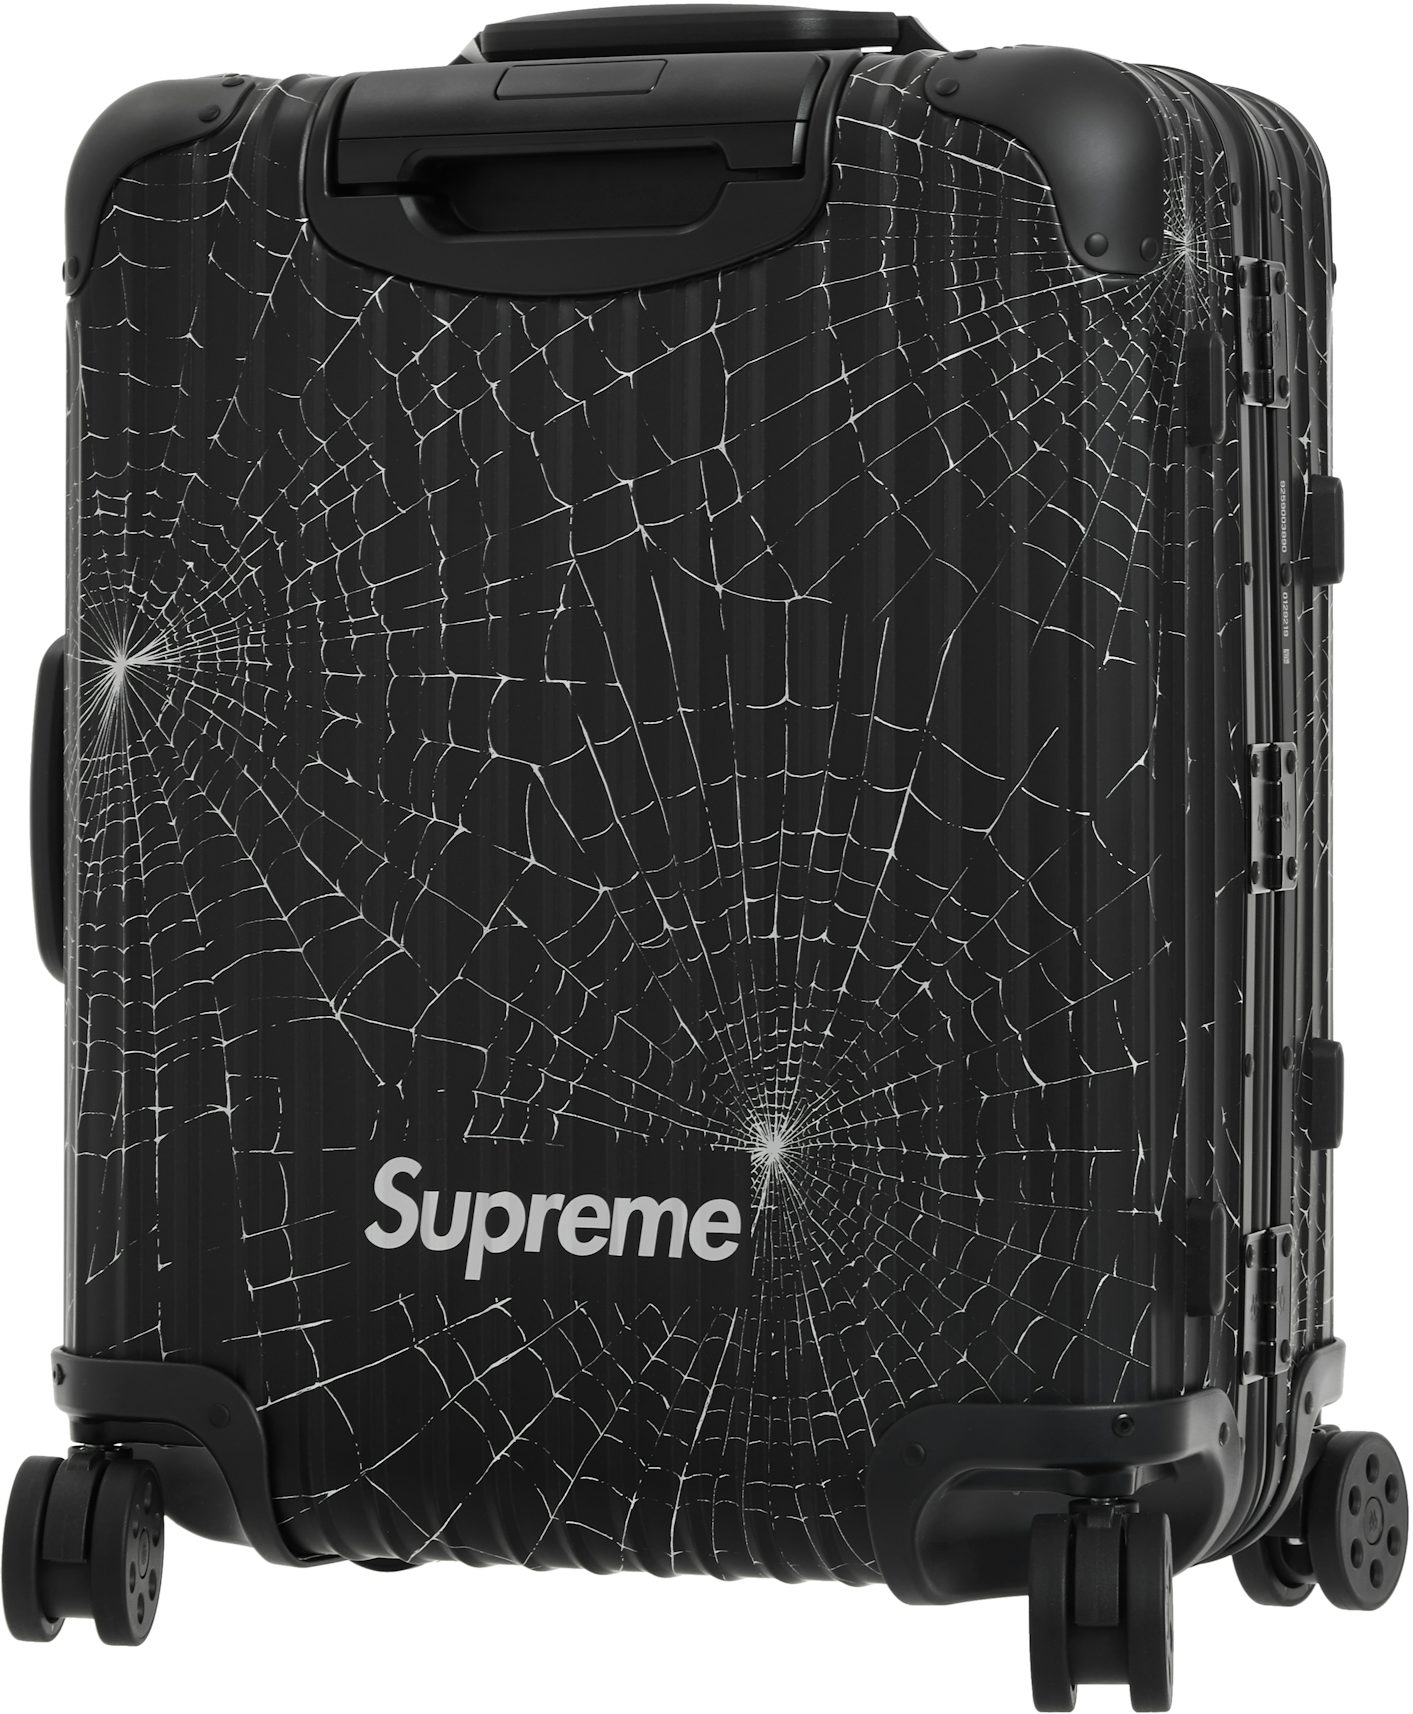 Supreme / RIMOWA Luggage Tag